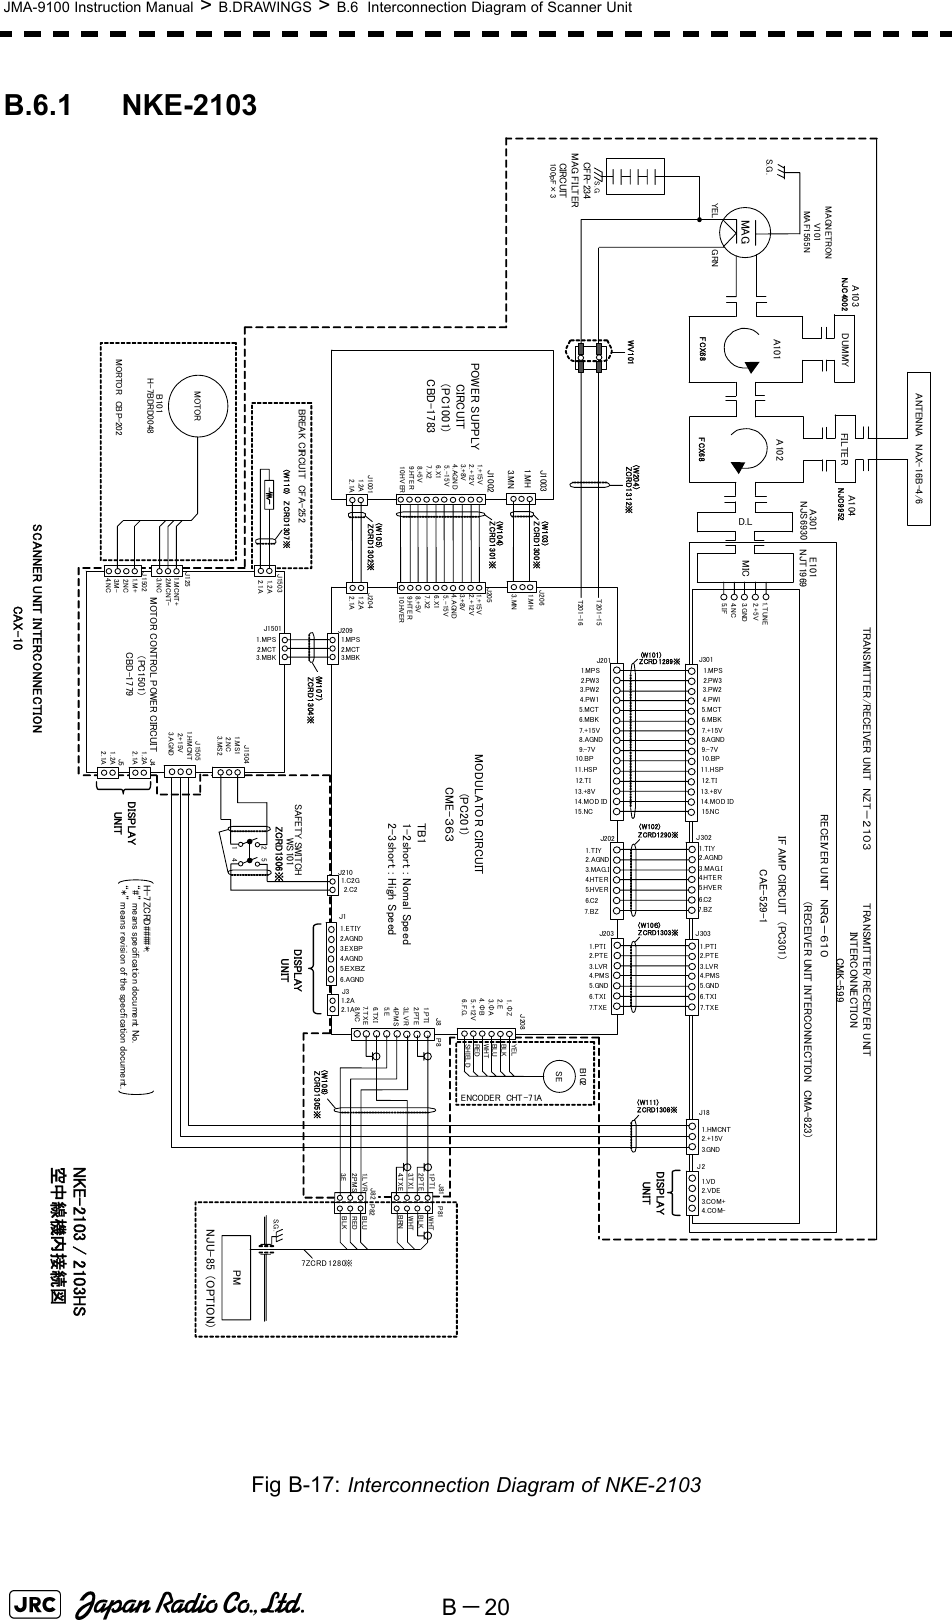 B－20JMA-9100 Instruction Manual &gt; B.DRAWINGS &gt; B.6  Interconnection Diagram of Scanner UnitB.6.1 NKE-2103Fig B-17: Interconnection Diagram of NKE-2103 NKE-2103 / 2103HS空中線機内接続図SCANNER UNIT INTERCONNECTIONCAX-10E101NJT1969A301NJS6930ANTENNA NAX-16B-4/6FILTERDUMMYA1011.TUNE2.+5V3.GND4.NC5.IFIF AMP CIRCUIT (PC301)CAE-529-1MAGMAGNETRONV101MAF1565NPOWER SUPPLY CIRCUIT (PC1001)CBD-17831.2A2.1AJ1001J20115.NC4.PW15.MCT6.MBK7.+15V8.AGND9.-7V10.BP11.HSP1.MPS2.PW33.PW212.TI13.+8V14.MOD IDT201-16T201-151.MH3.MNJ1003J2024.HTER1.TIY2.AGND3.MAG.I5.HVER6.C27.BZJ2034.PMS1.PTI2.PTE3.LVR5.GND6.TXI7.TXE1.2A2.1AJ36.AGNDJ14.AGND1.E TIY2.AGND3.EXBP5.ＥＸＢＺSAFETY SWITCHWS101MODULATOR CIRCUIT (PC201)CME-３６３J30115.NC4.PW15.MCT6.MBK7.+15V8.AGND9.-7V10.BP11.HSP1.MPS2.PW33.PW212.TI13.+8V14.MOD IDJ3024.HTER1.TIY2.AGND3.MAG.I5.HVER6.C27.BZJ3034.PMS1.PTI2.PTE3.LVR5.GND6.TXI7.TXE4.COM-1.VD2.VDE3.COM+J2J181.HMCNT2.+15V3.GNDSEB102J84.PMS1.PTI2.PTE3.LVR5.E6.TXI7.TXE4.ΦB1.ΦZ2.E3.ΦA5.+12V6.F.G.YELBLKBLUWHTREDSHIELDDISPLAY UNITP8 1.PTI2.PTE1.LVR2.PMS3.E3.TXI4.TXEJ81J82P81P82WHTBLKBLUREDBLKWHTBRNPMNJU-857ZCRD1280※DISPLAY UNITDISPLAY UNIT1.2A2.1AJ15031.MPS2.MCTJ15013.MBK1.HMCNT2.+15VJ15053.AGND1.2A2.1AJ41.2A2.1AJ51.MPS2.MCTJ2093.MBK1.C2G2.C2J2101.2A2.1AJ204J2061.MH3.MNMOTOR CONTROL POWER CIRCUIT (PC1501)CBD-17791.MCNT+J1253.NC1.M+2.NCJ15023.M-4.NC2.MC NT-MOTORB101H-7BDRD0048MORTOR CBP-202BREAK CIRCUIT CFA-252YEL G RNA103RECEIVER UNIT　ＮＲＧ－６１０MICS.G.S.G.(W204)ZCRD1312※(W110) ZCRD1307※(W107)ZCRD1304※(W103)ZCRD13 06※(W105)ZCRD1300※ZCRD1302※(W101)ZCRD1289※(W102)ZCRD1290※(W10６)ZCRD1303※(W111)ZCRD1308※(W108)ZCRD1305※(OPTION）5421J208D.L1.MS12.NCJ15043.MS2TRANSMITTER/RECEIVER UNIT　ＮZT－２１０３ TRANSMITTER/RECEIVER UNIT INTER C ON NE CTIO NCMK-5998.NC(W104)ZCRD1301※J2051.+15V2.+12V3.+8V4.AGND5.-15V6.X17.X28.+5V9.HTER10.HVERJ10021.+15V2.+12V3.+8V4.AGN D5.-15V6.X17.X28.+5V9.HTER10.HVERWV101A102(RECEIVER UNIT INTERCONNECTION CMA-823)ENCODER CHT -71ANJC4002FCX68 FCX68S.G.CFR-234MAG FILTER CIRCUIT100pF×3A104NJC9952TB11-2short : Nomal Speed2-3short  : High SpeedH-7 ZCRD#### *:“#” means specifi cation do cu ment No.“*” means revisi on of  the specfi cation docume nt.